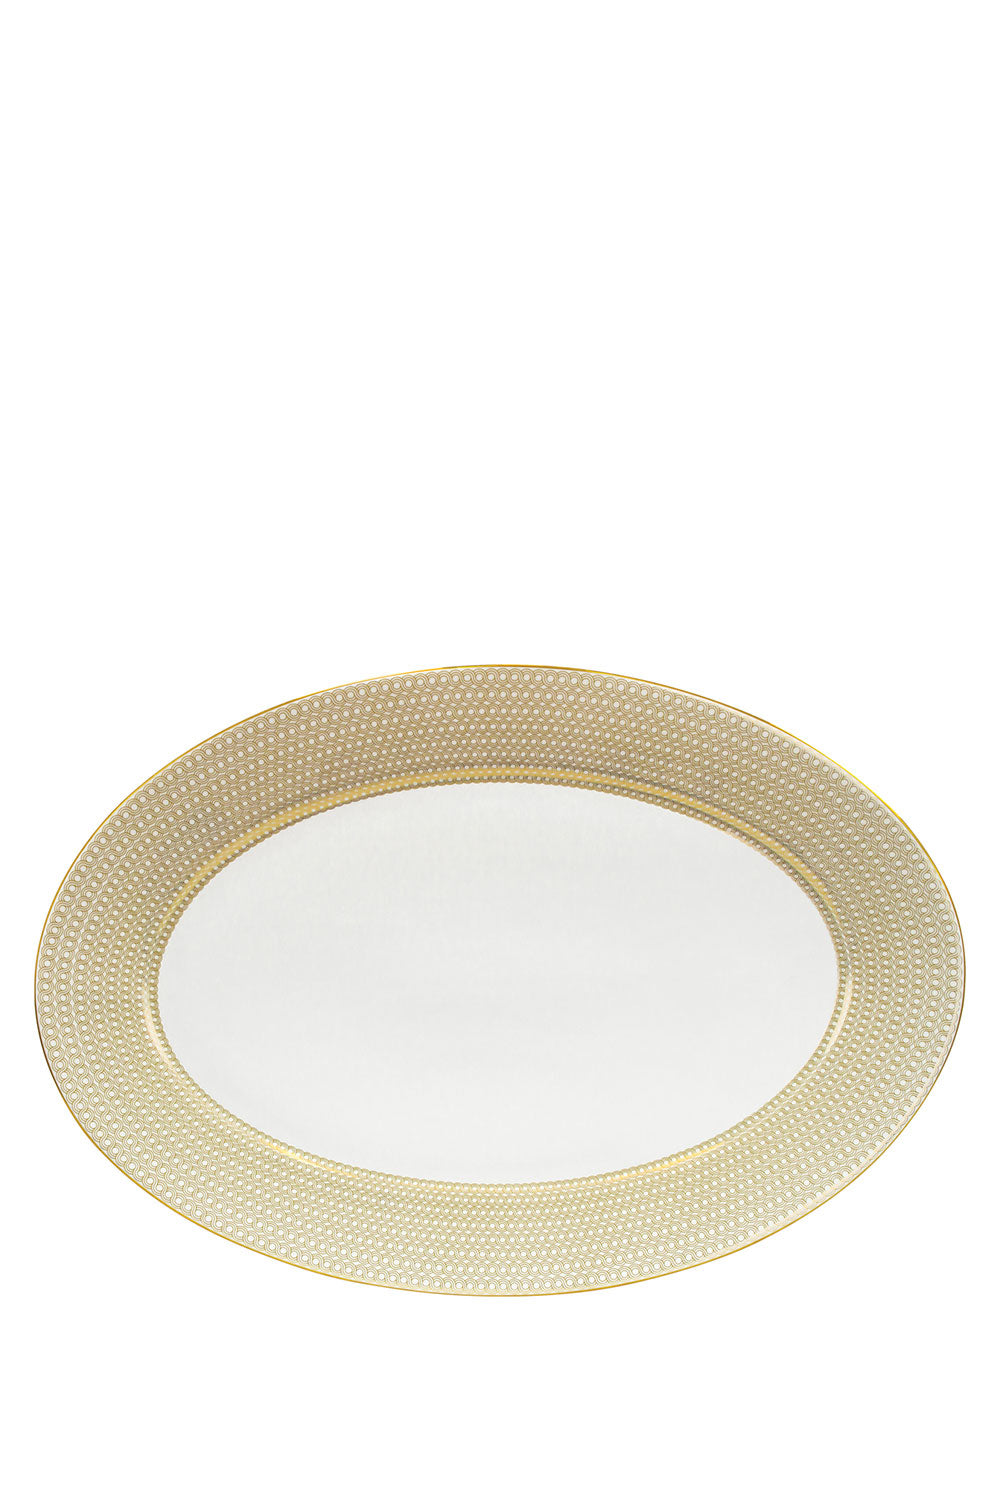 Infinity Large Oval Platter, Gold, 39cm